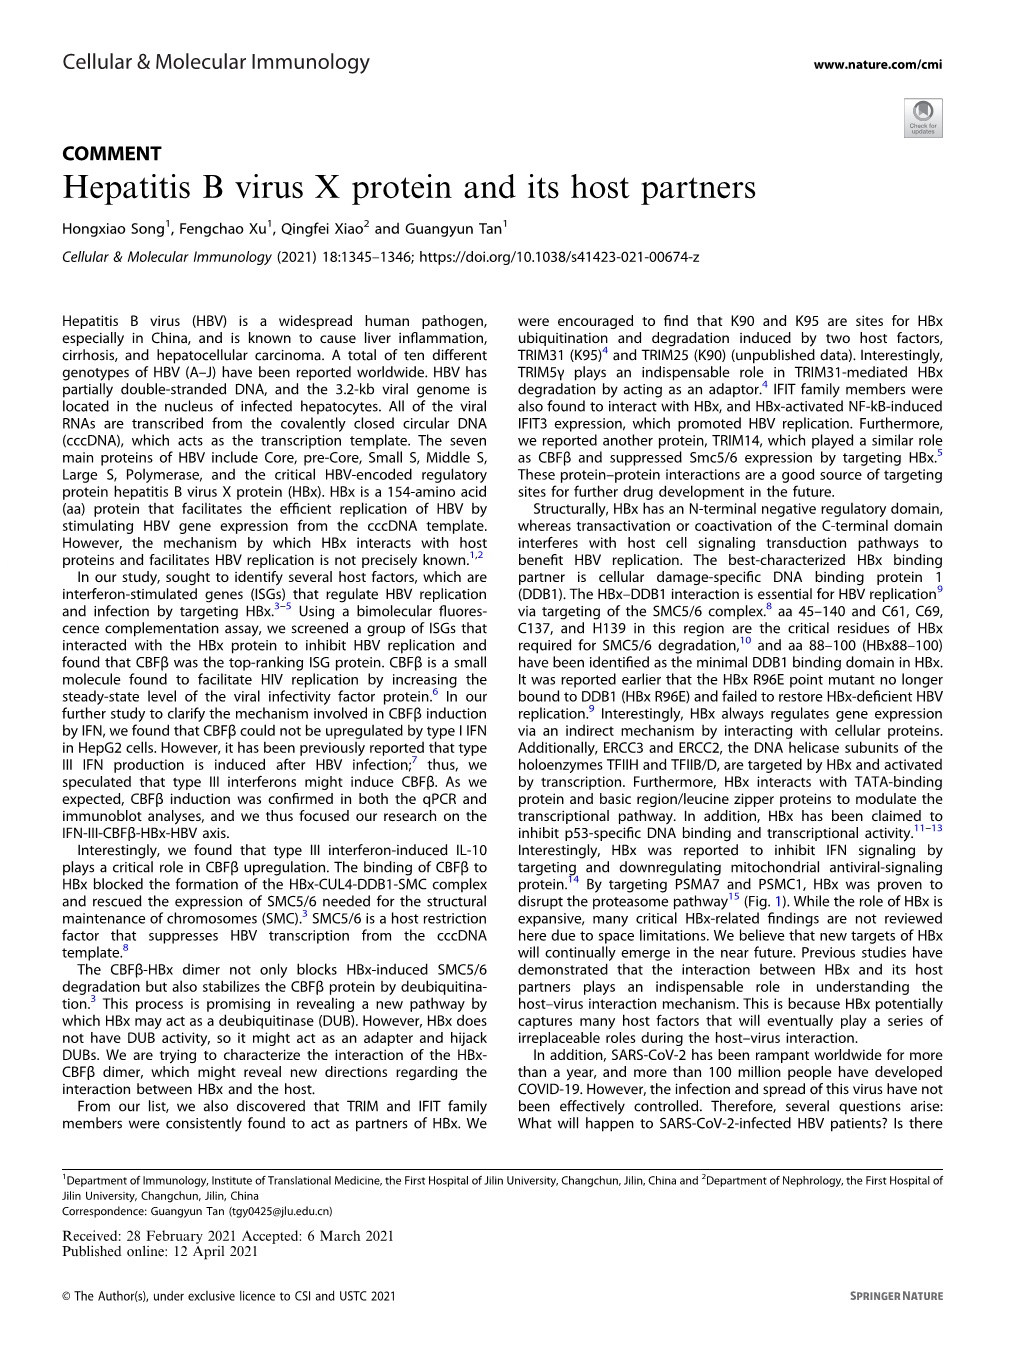 Hepatitis B Virus X Protein and Its Host Partners